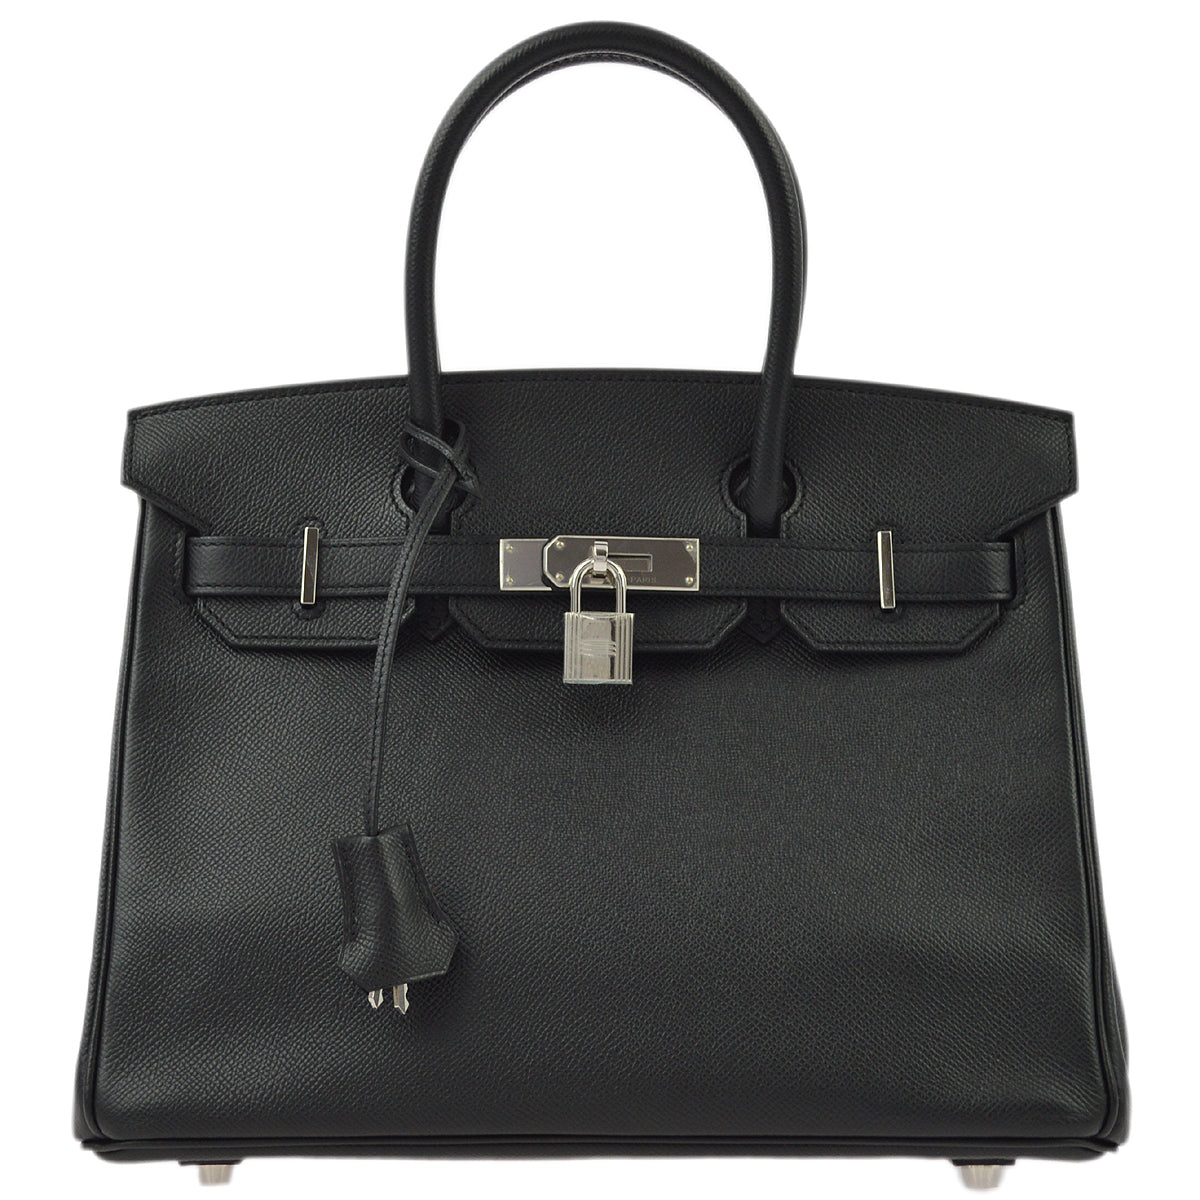 Shop Hermes | Birkin, Kelly, Picotin Handbags & More – Timeless 